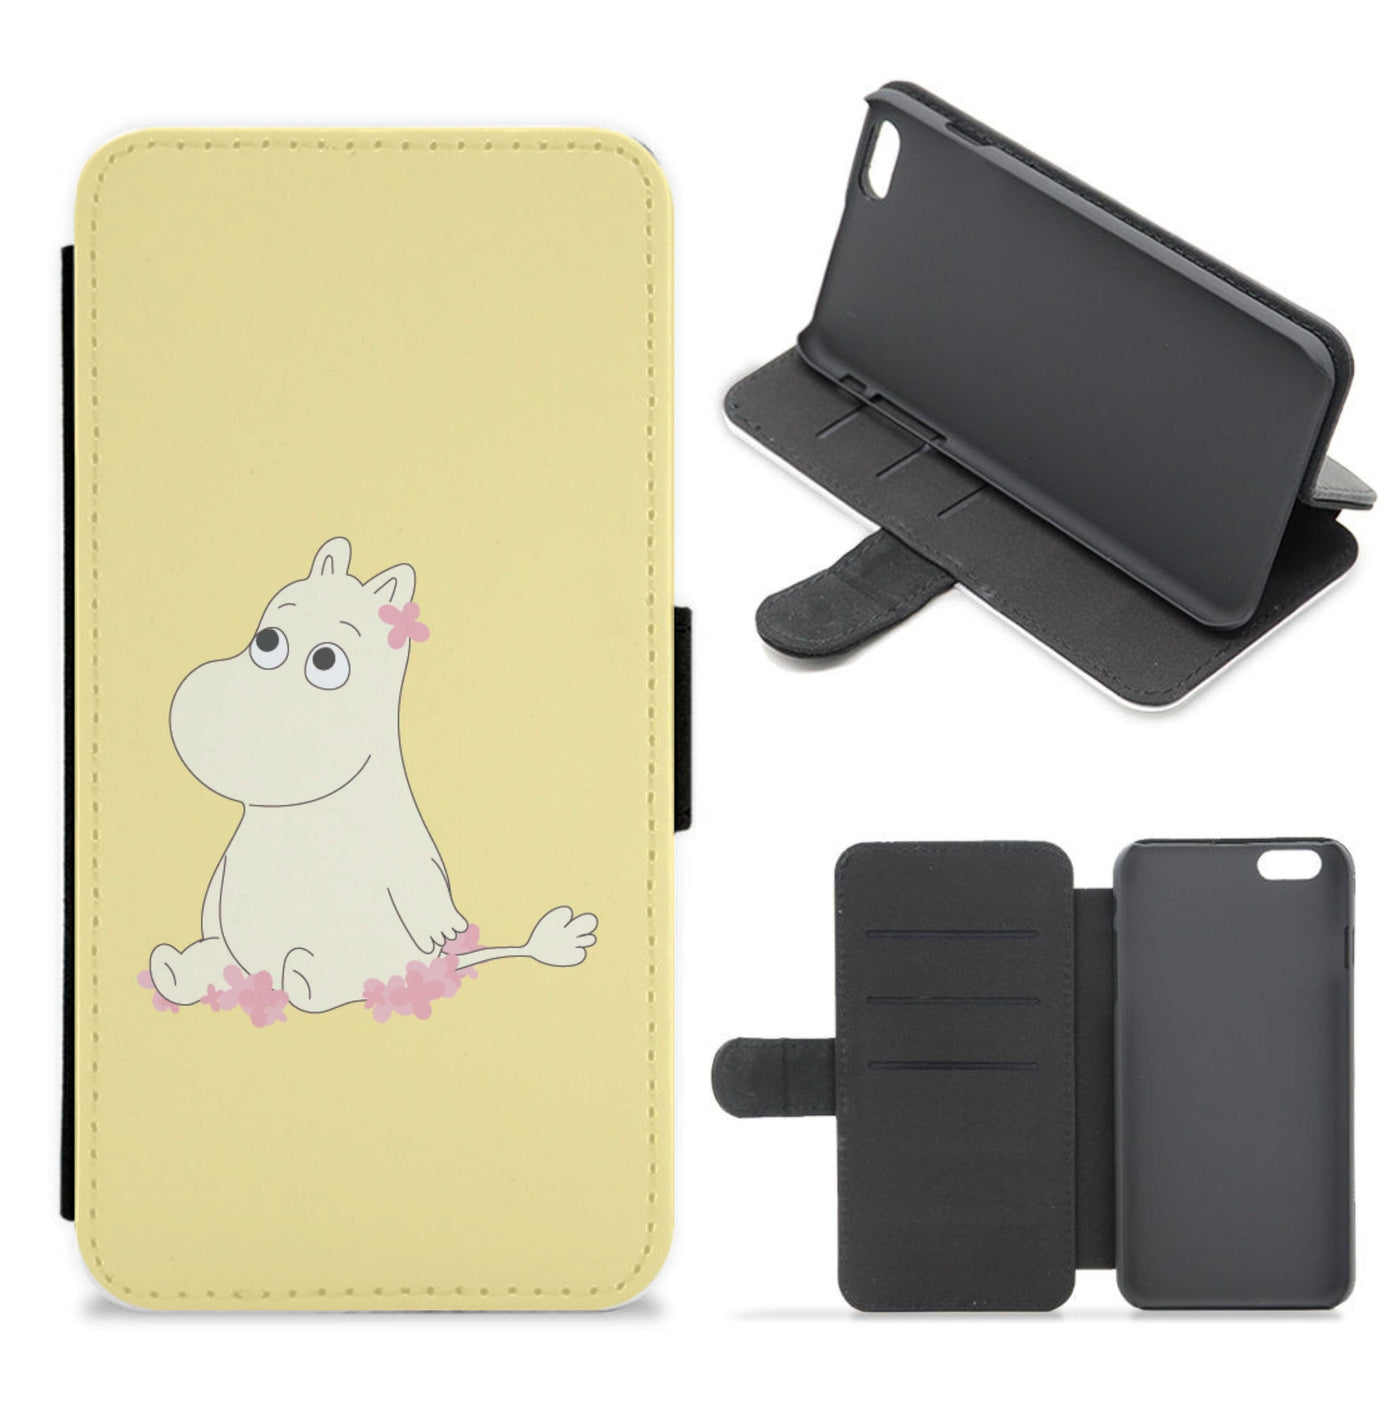 Moomintroll - Moomin Flip / Wallet Phone Case